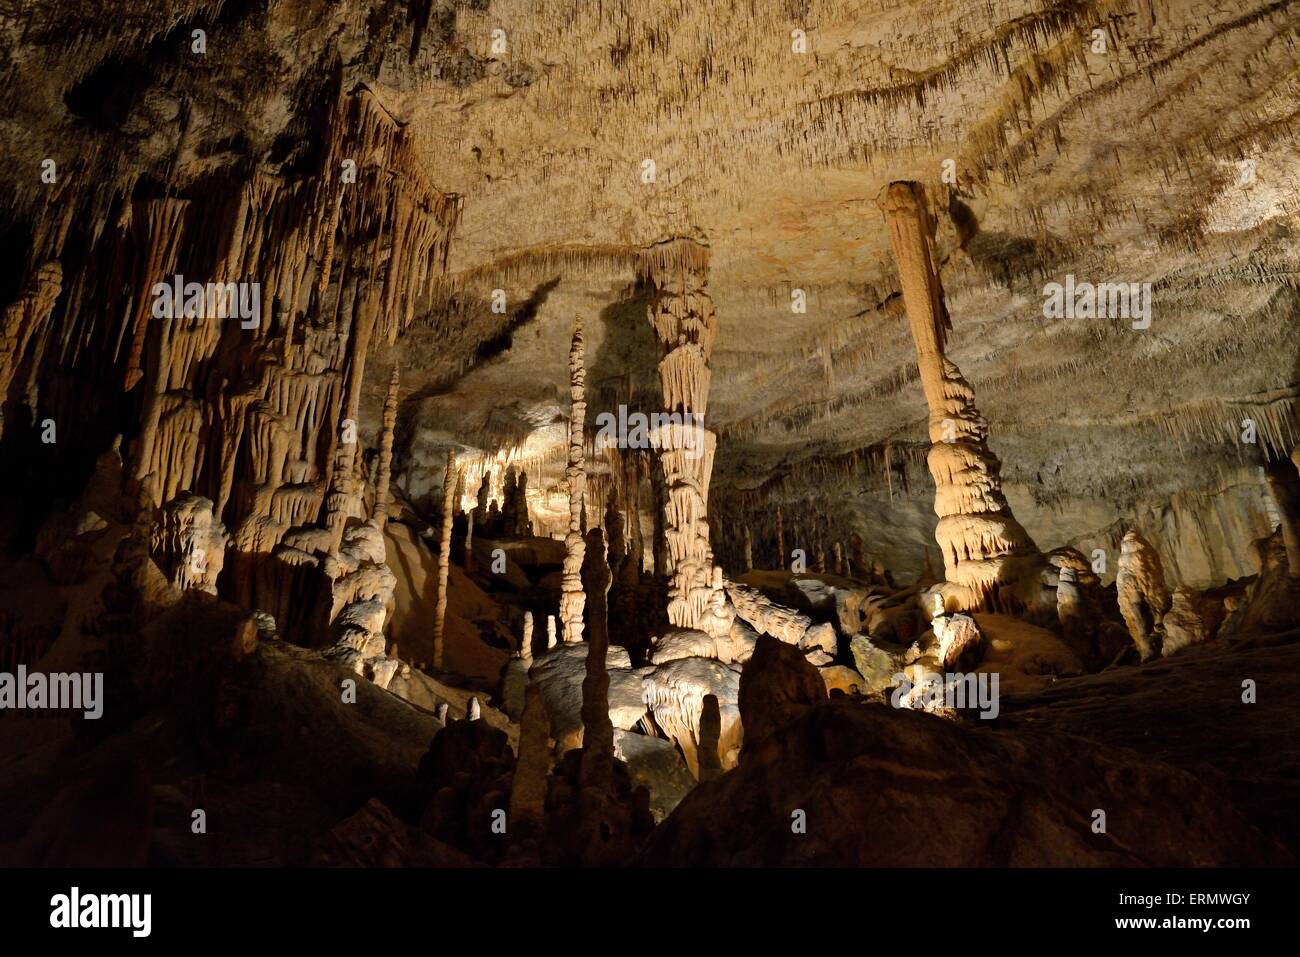 Grottes del Drach, Cuevas del Drach, Caverne du Dragon, Porto Cristo, Majorque, Îles Baléares, Espagne Banque D'Images